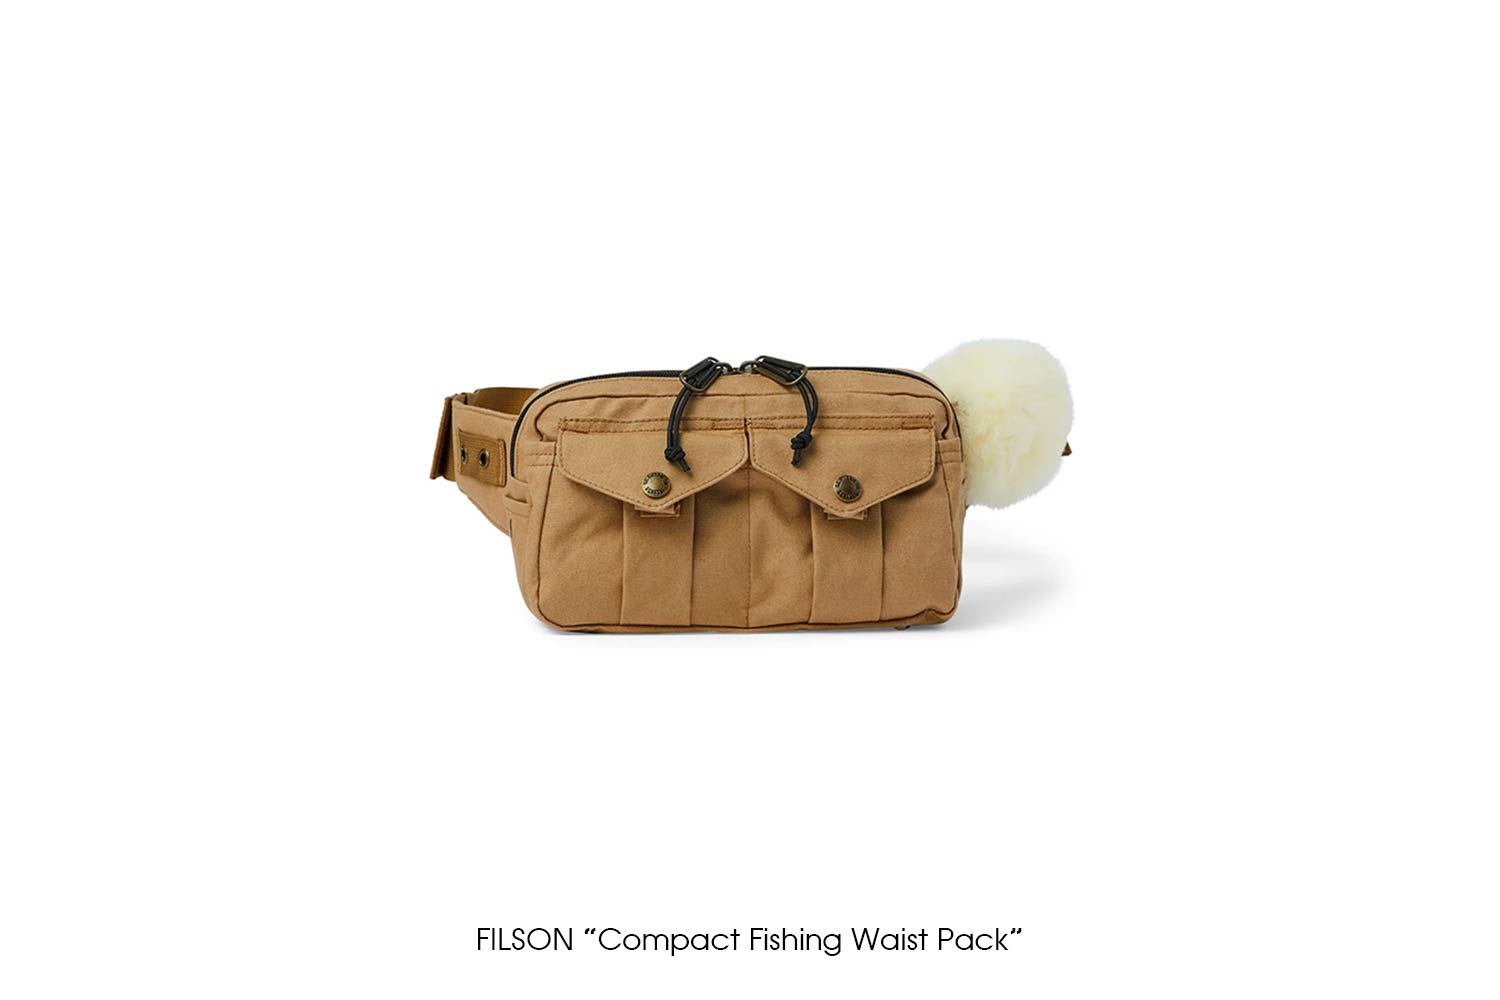 FILSON "Compact Fishing Waist Pack"